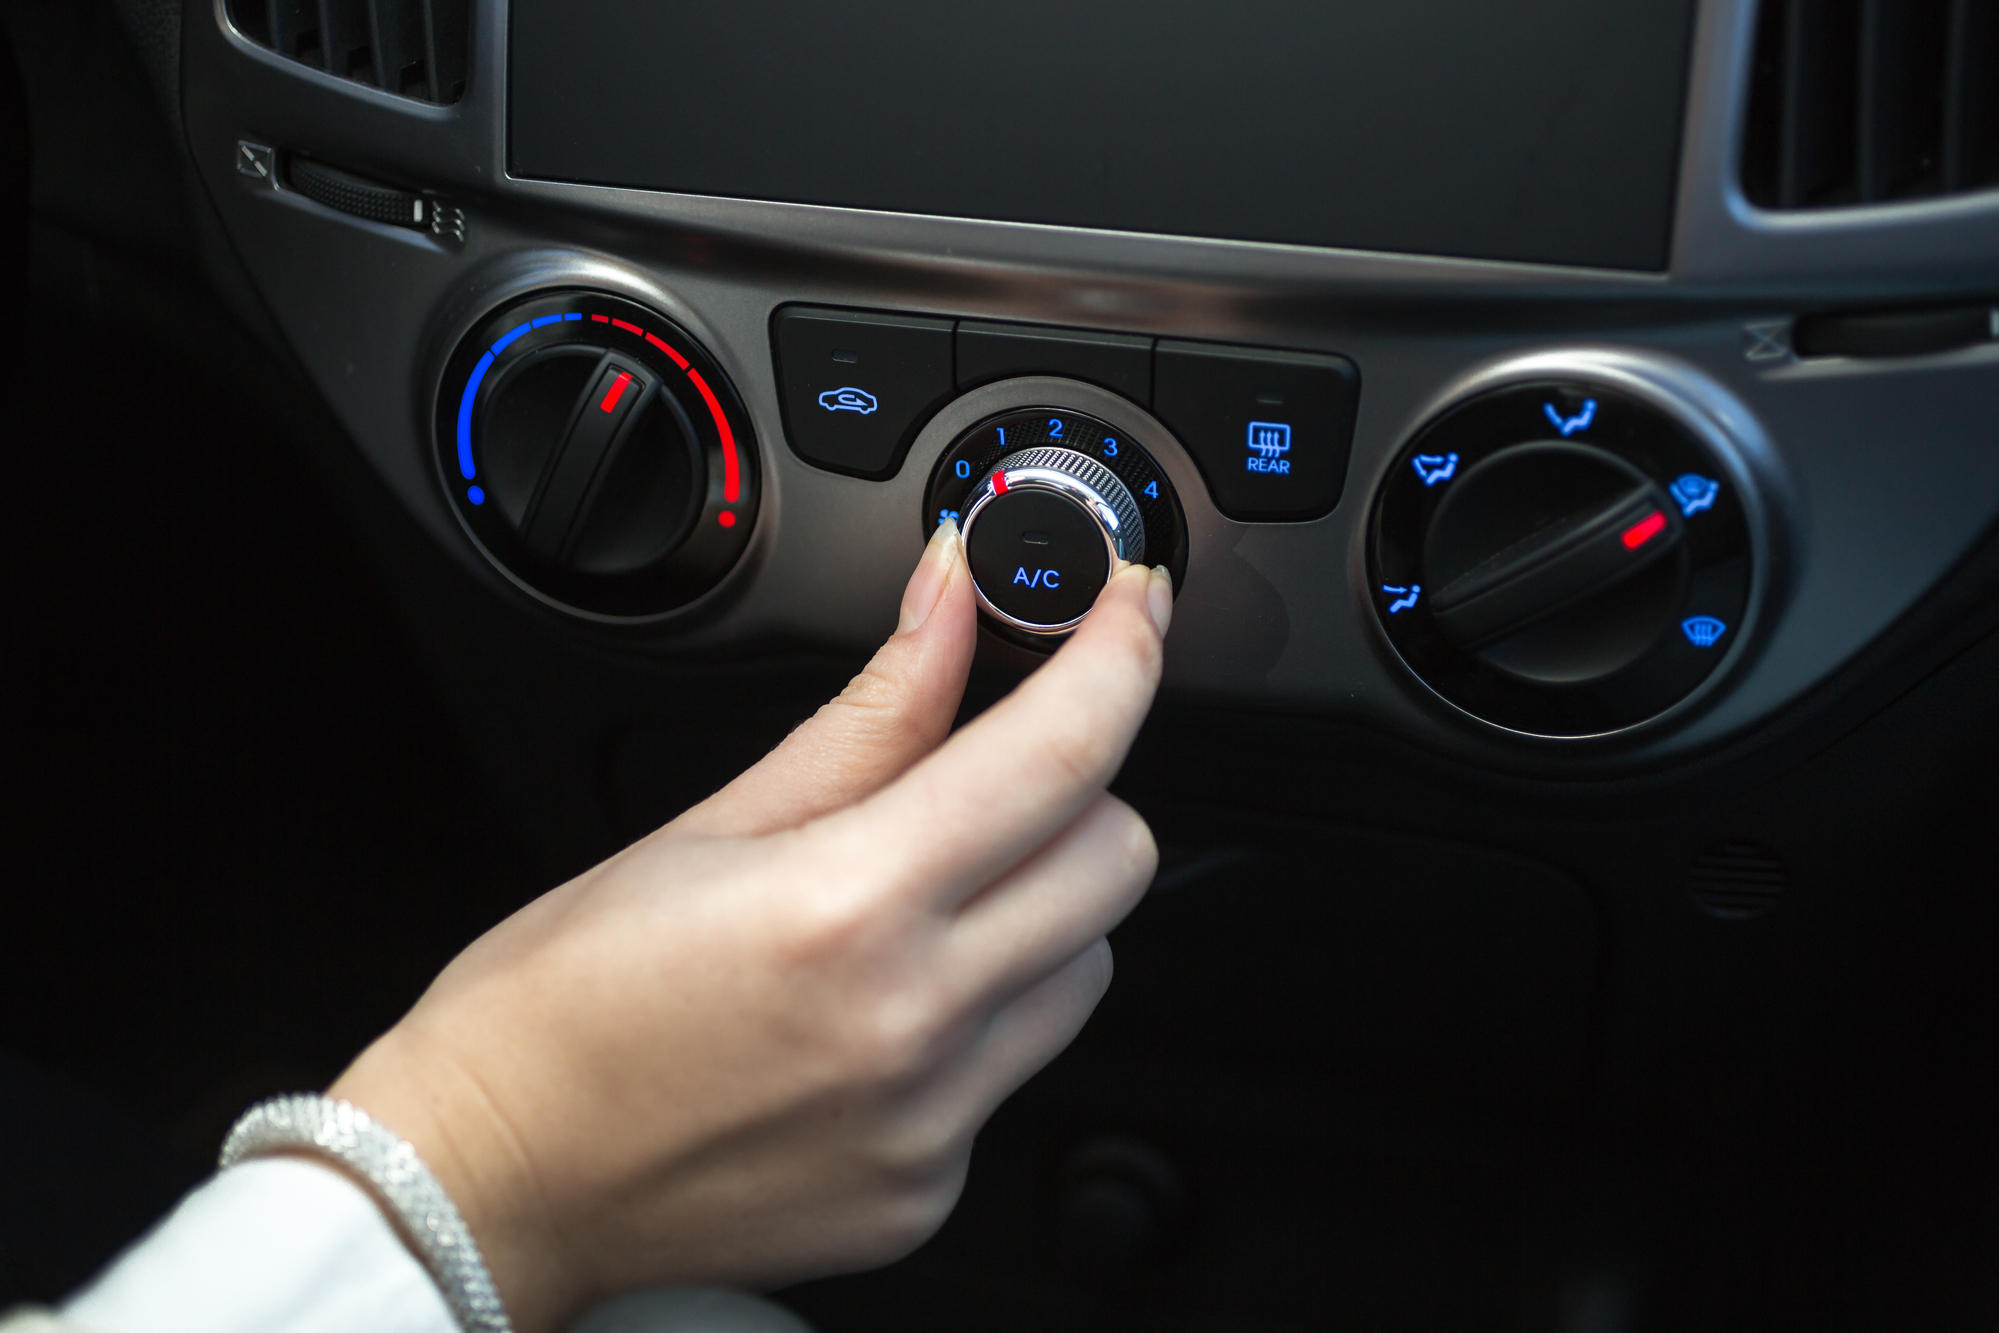 Hand adjusting car's air conditioner control panel. Air recirculation in off.